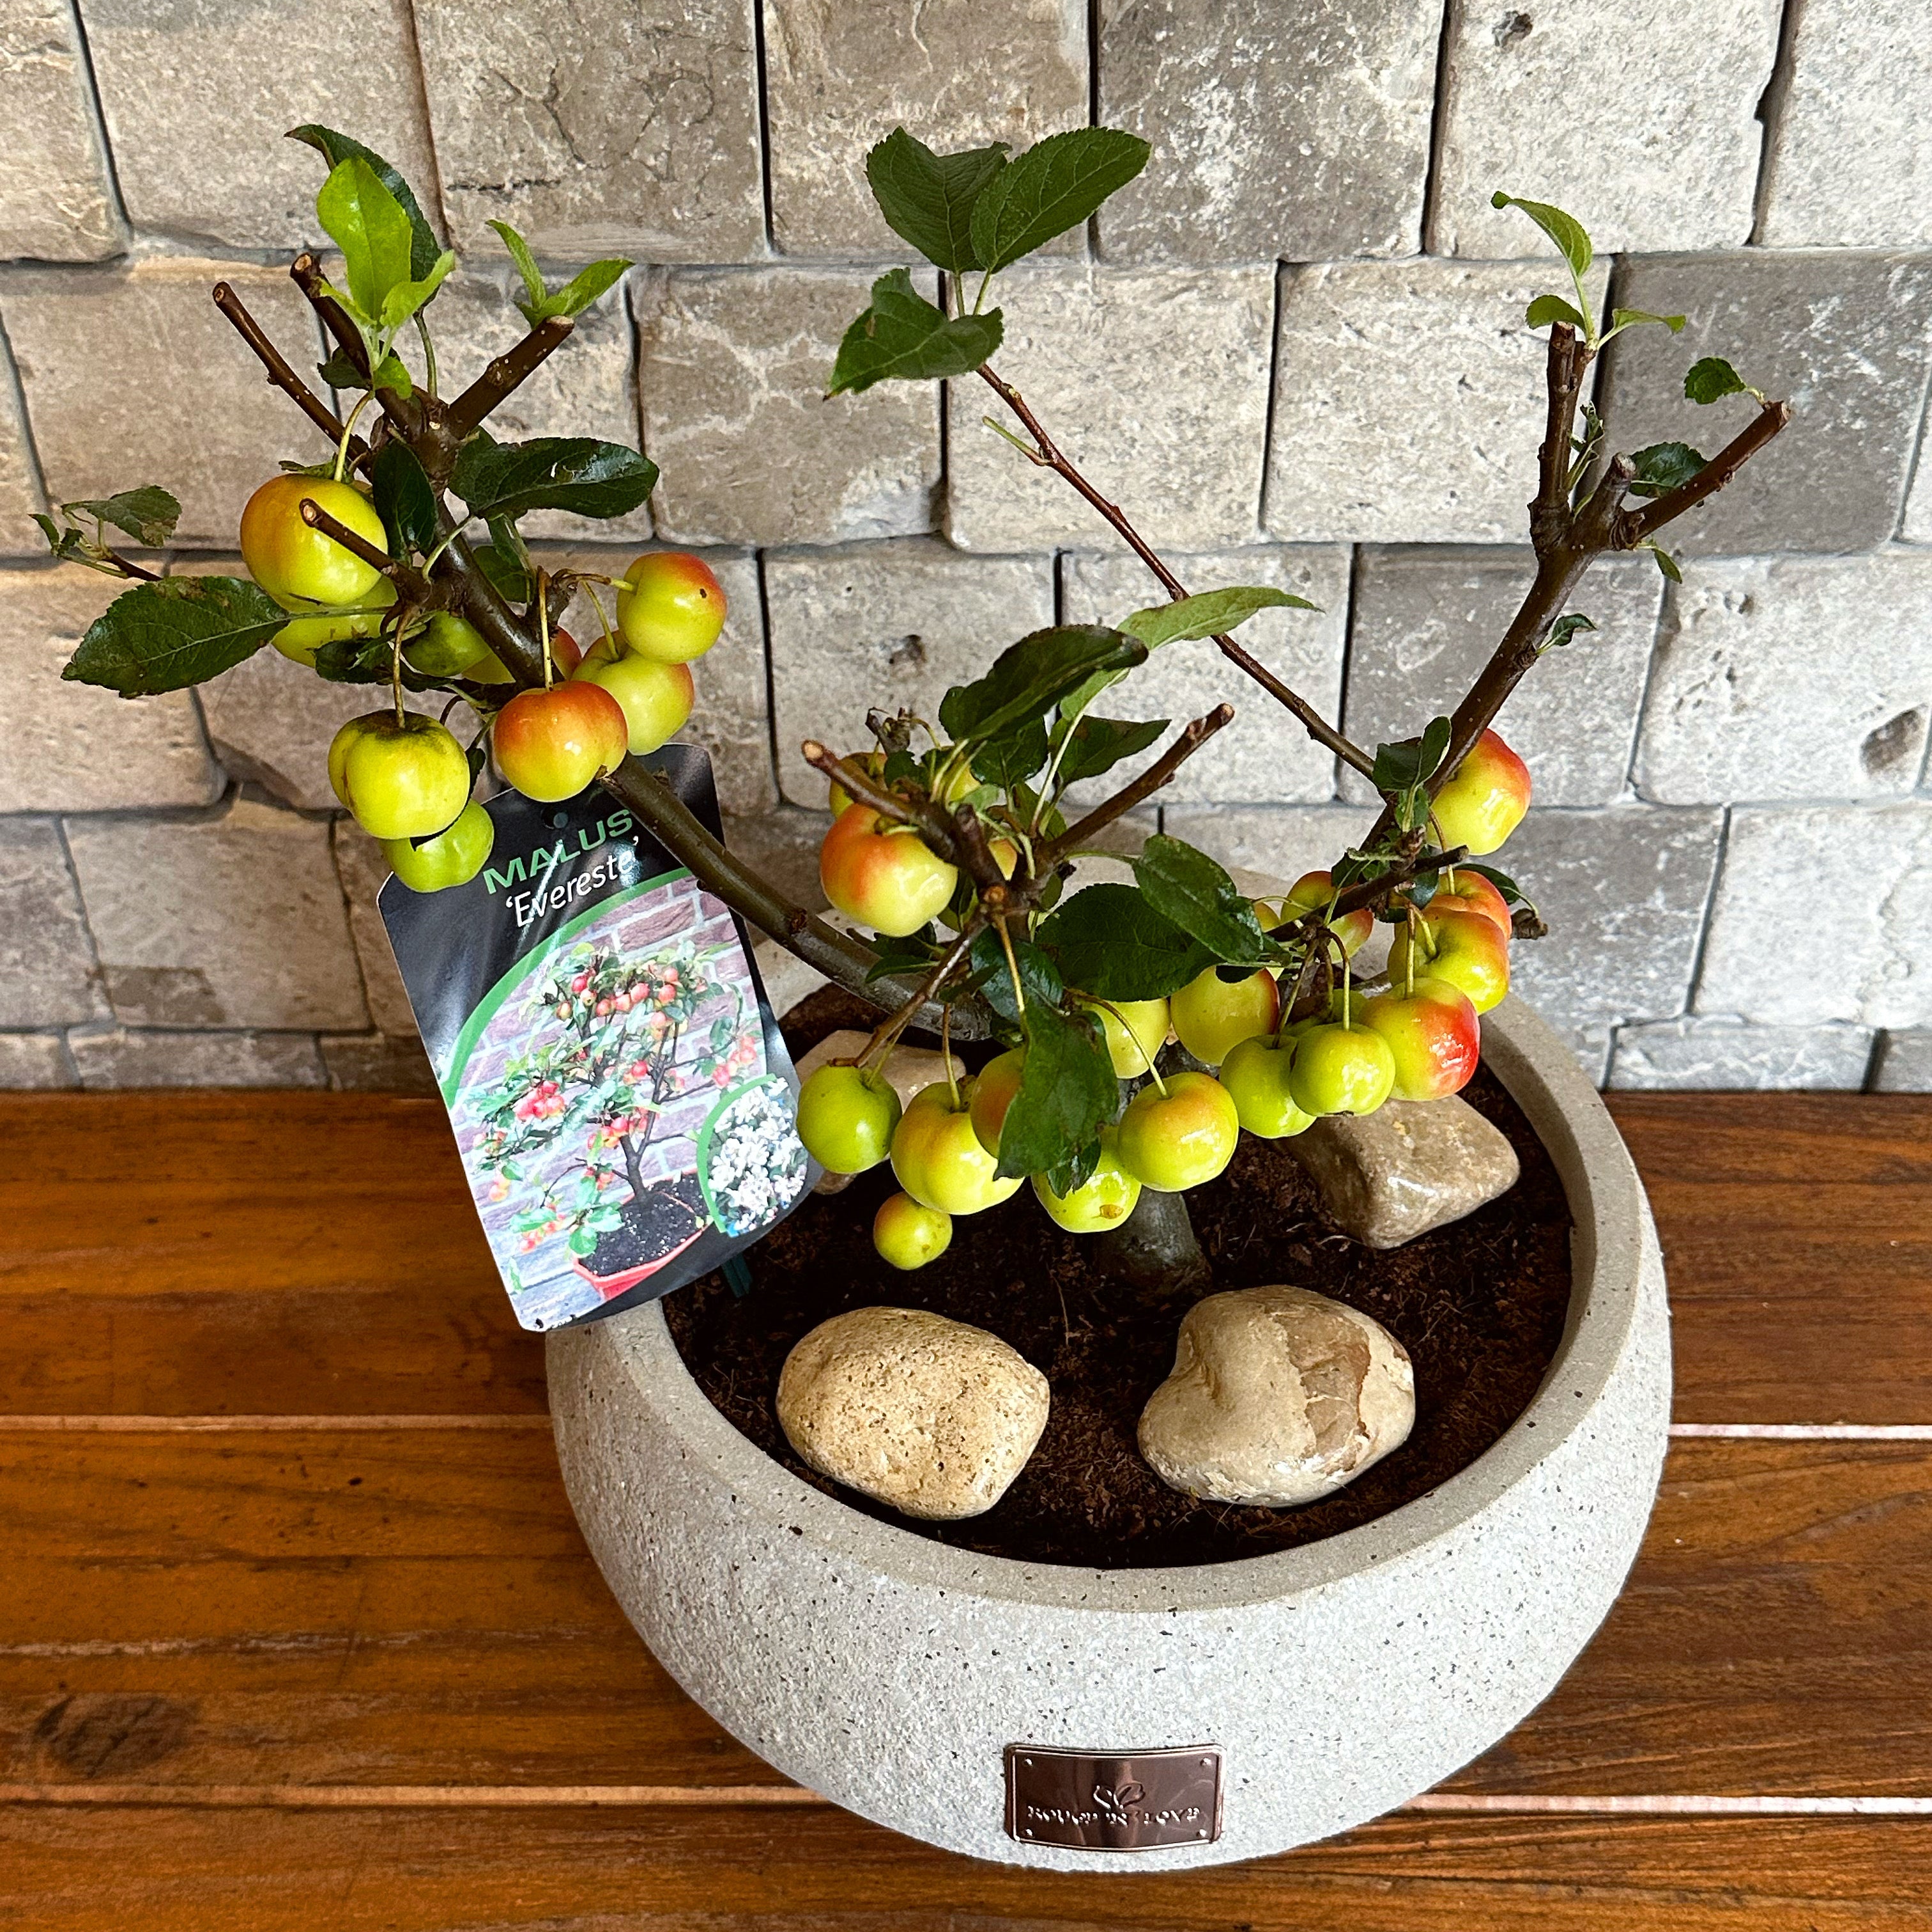 ‘Malus Evereste’ Sweet Apple Bonsai Tree